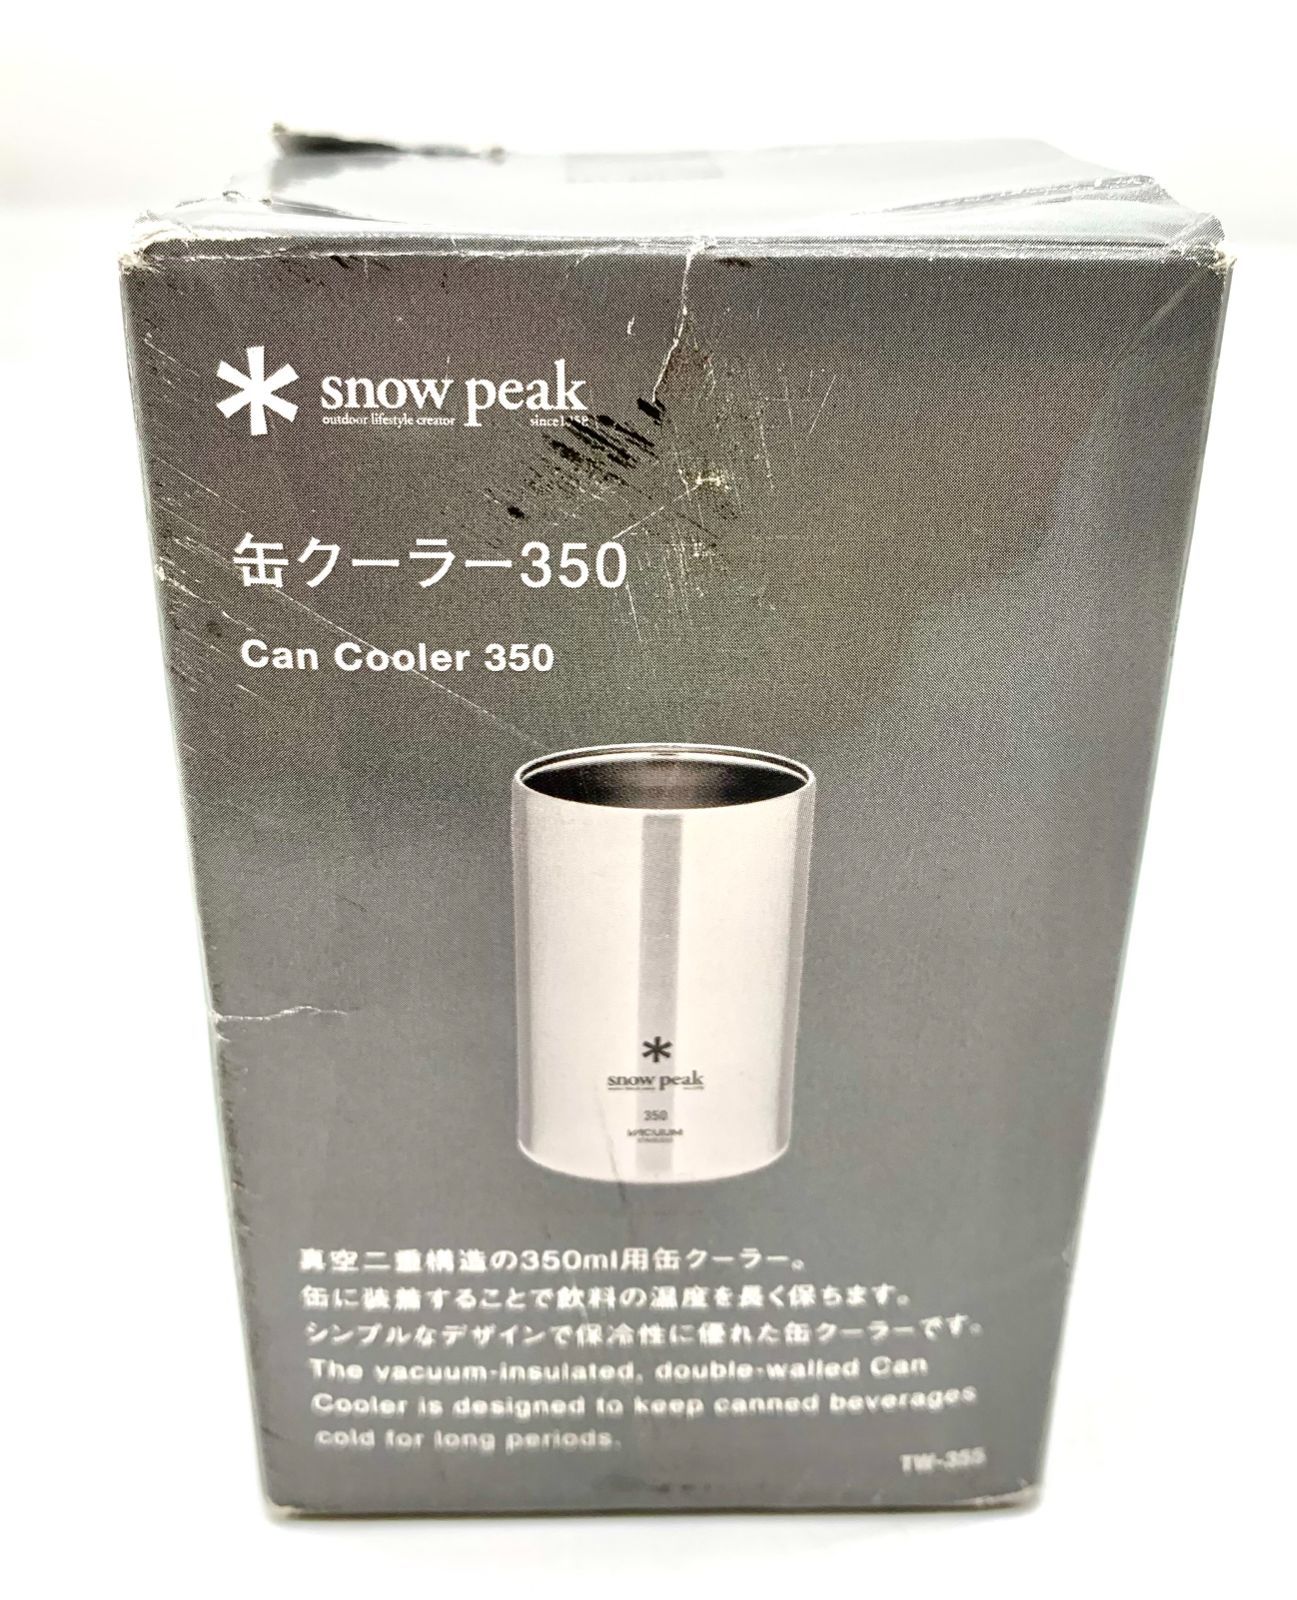 snow peak スノーピーク 缶クーラー 350ml TW-355 新品 - バーベキュー 